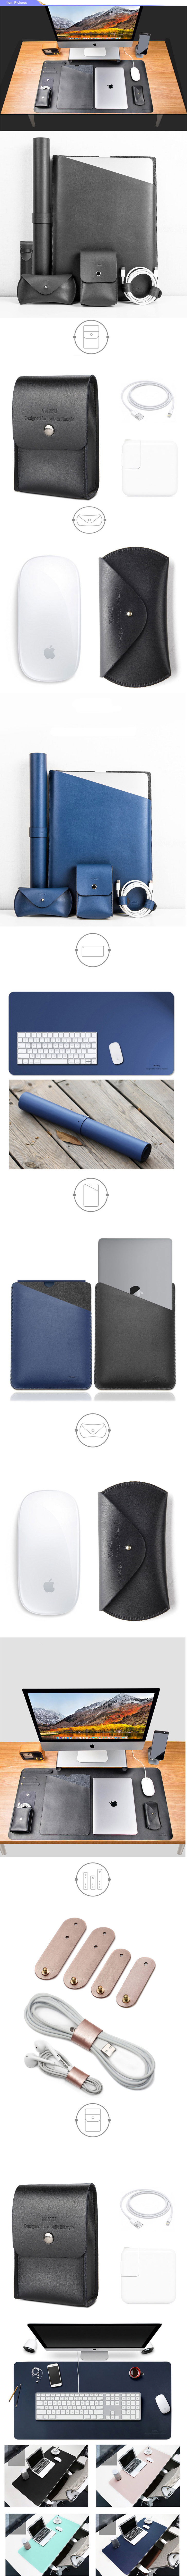  WIWU 6 and 1 15.4 inch Laptop Bag